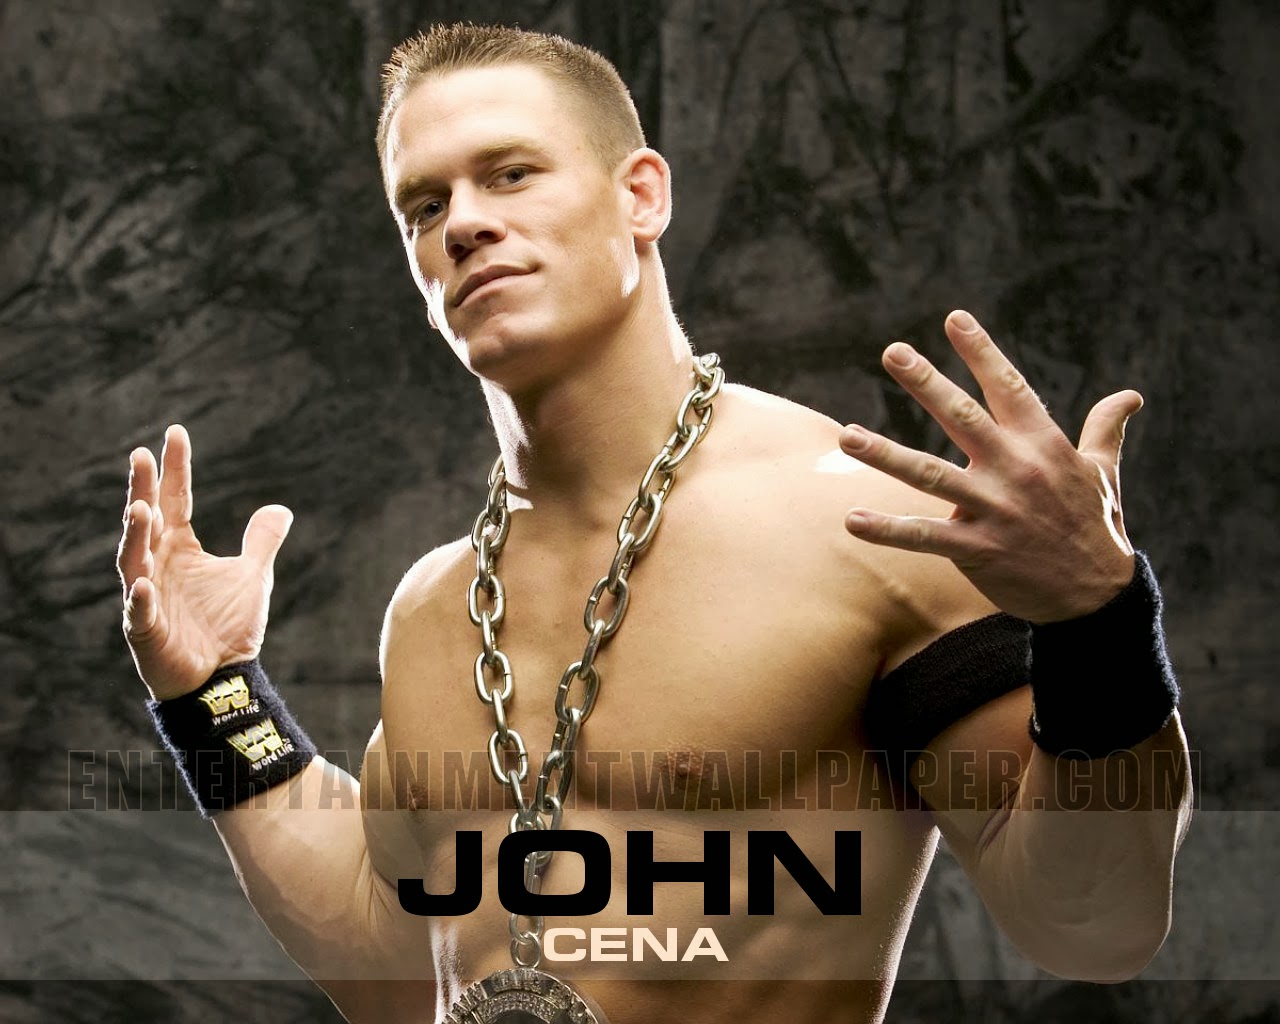 john cena iphone wallpaper,barechested,muscle,chest,wrestler,arm